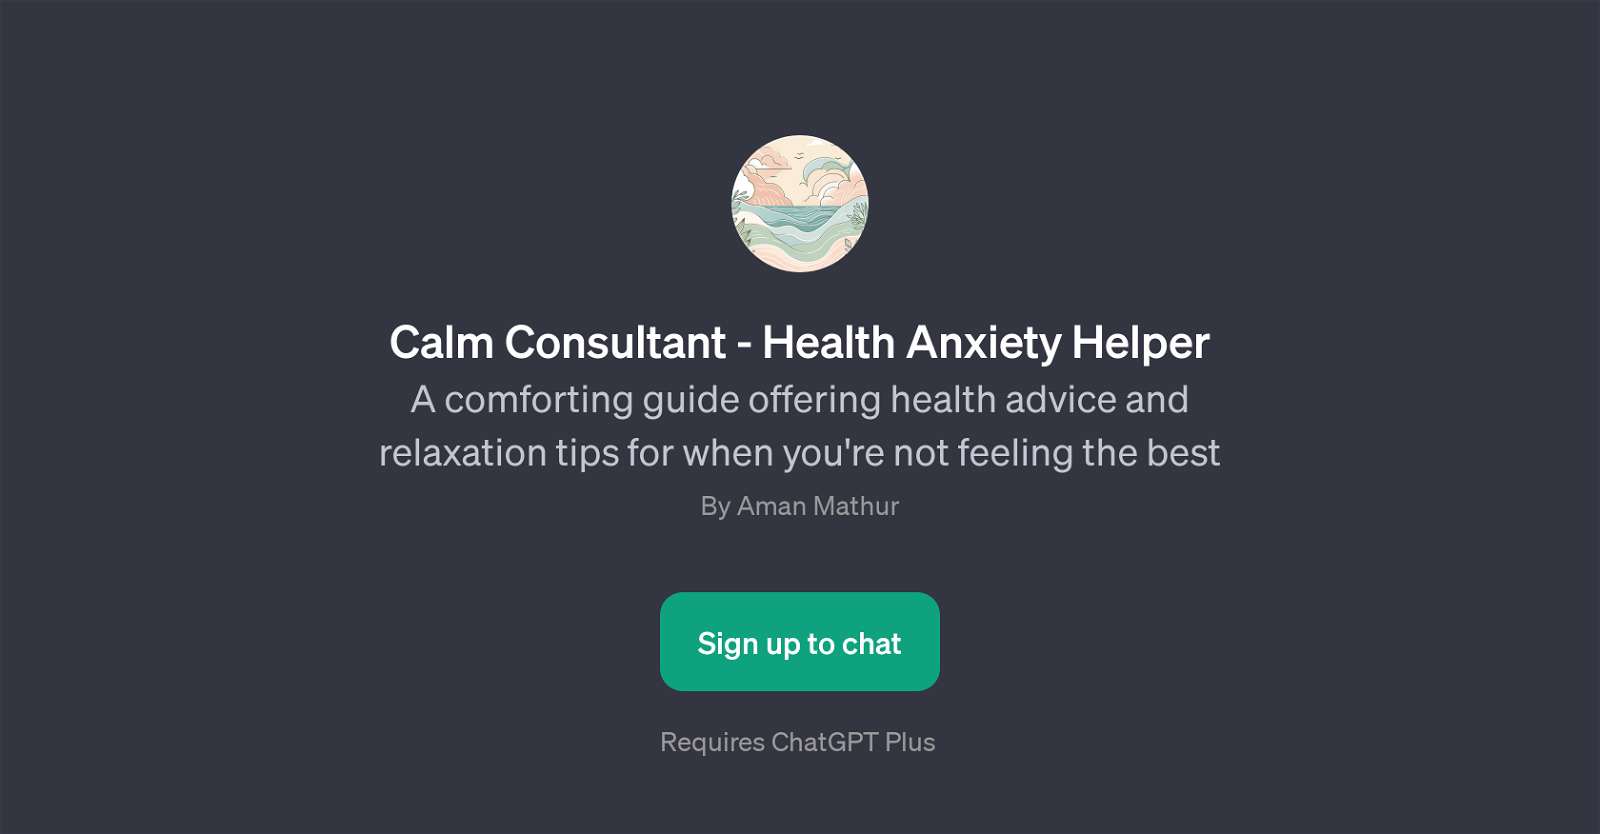 Calm Consultant - Health Anxiety Helper website